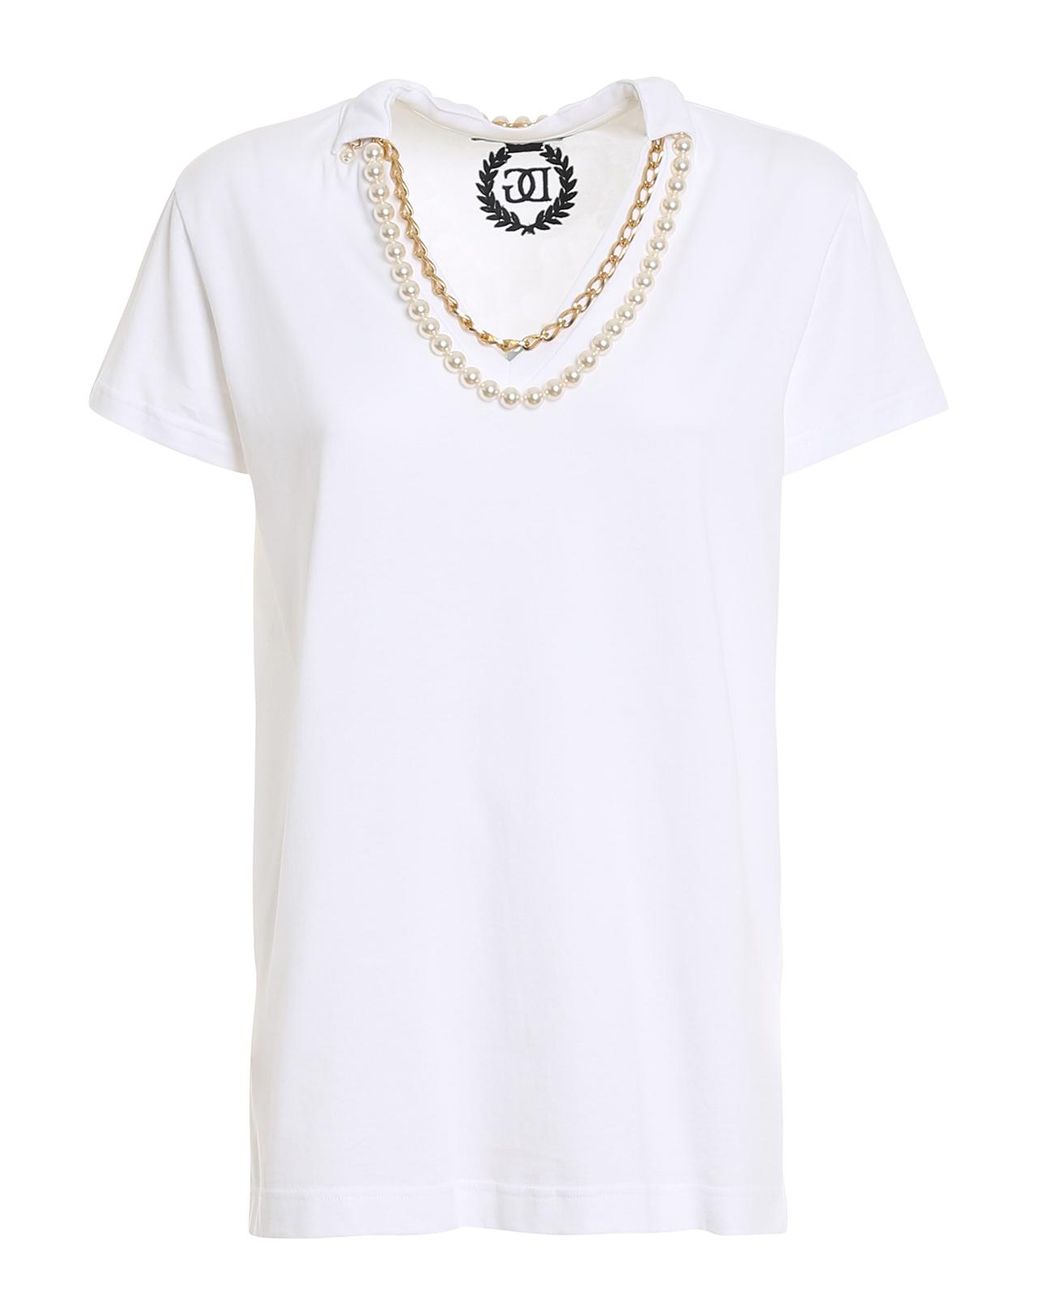 Dolce & Gabbana Cotton V Neck Tshirt in White - Lyst